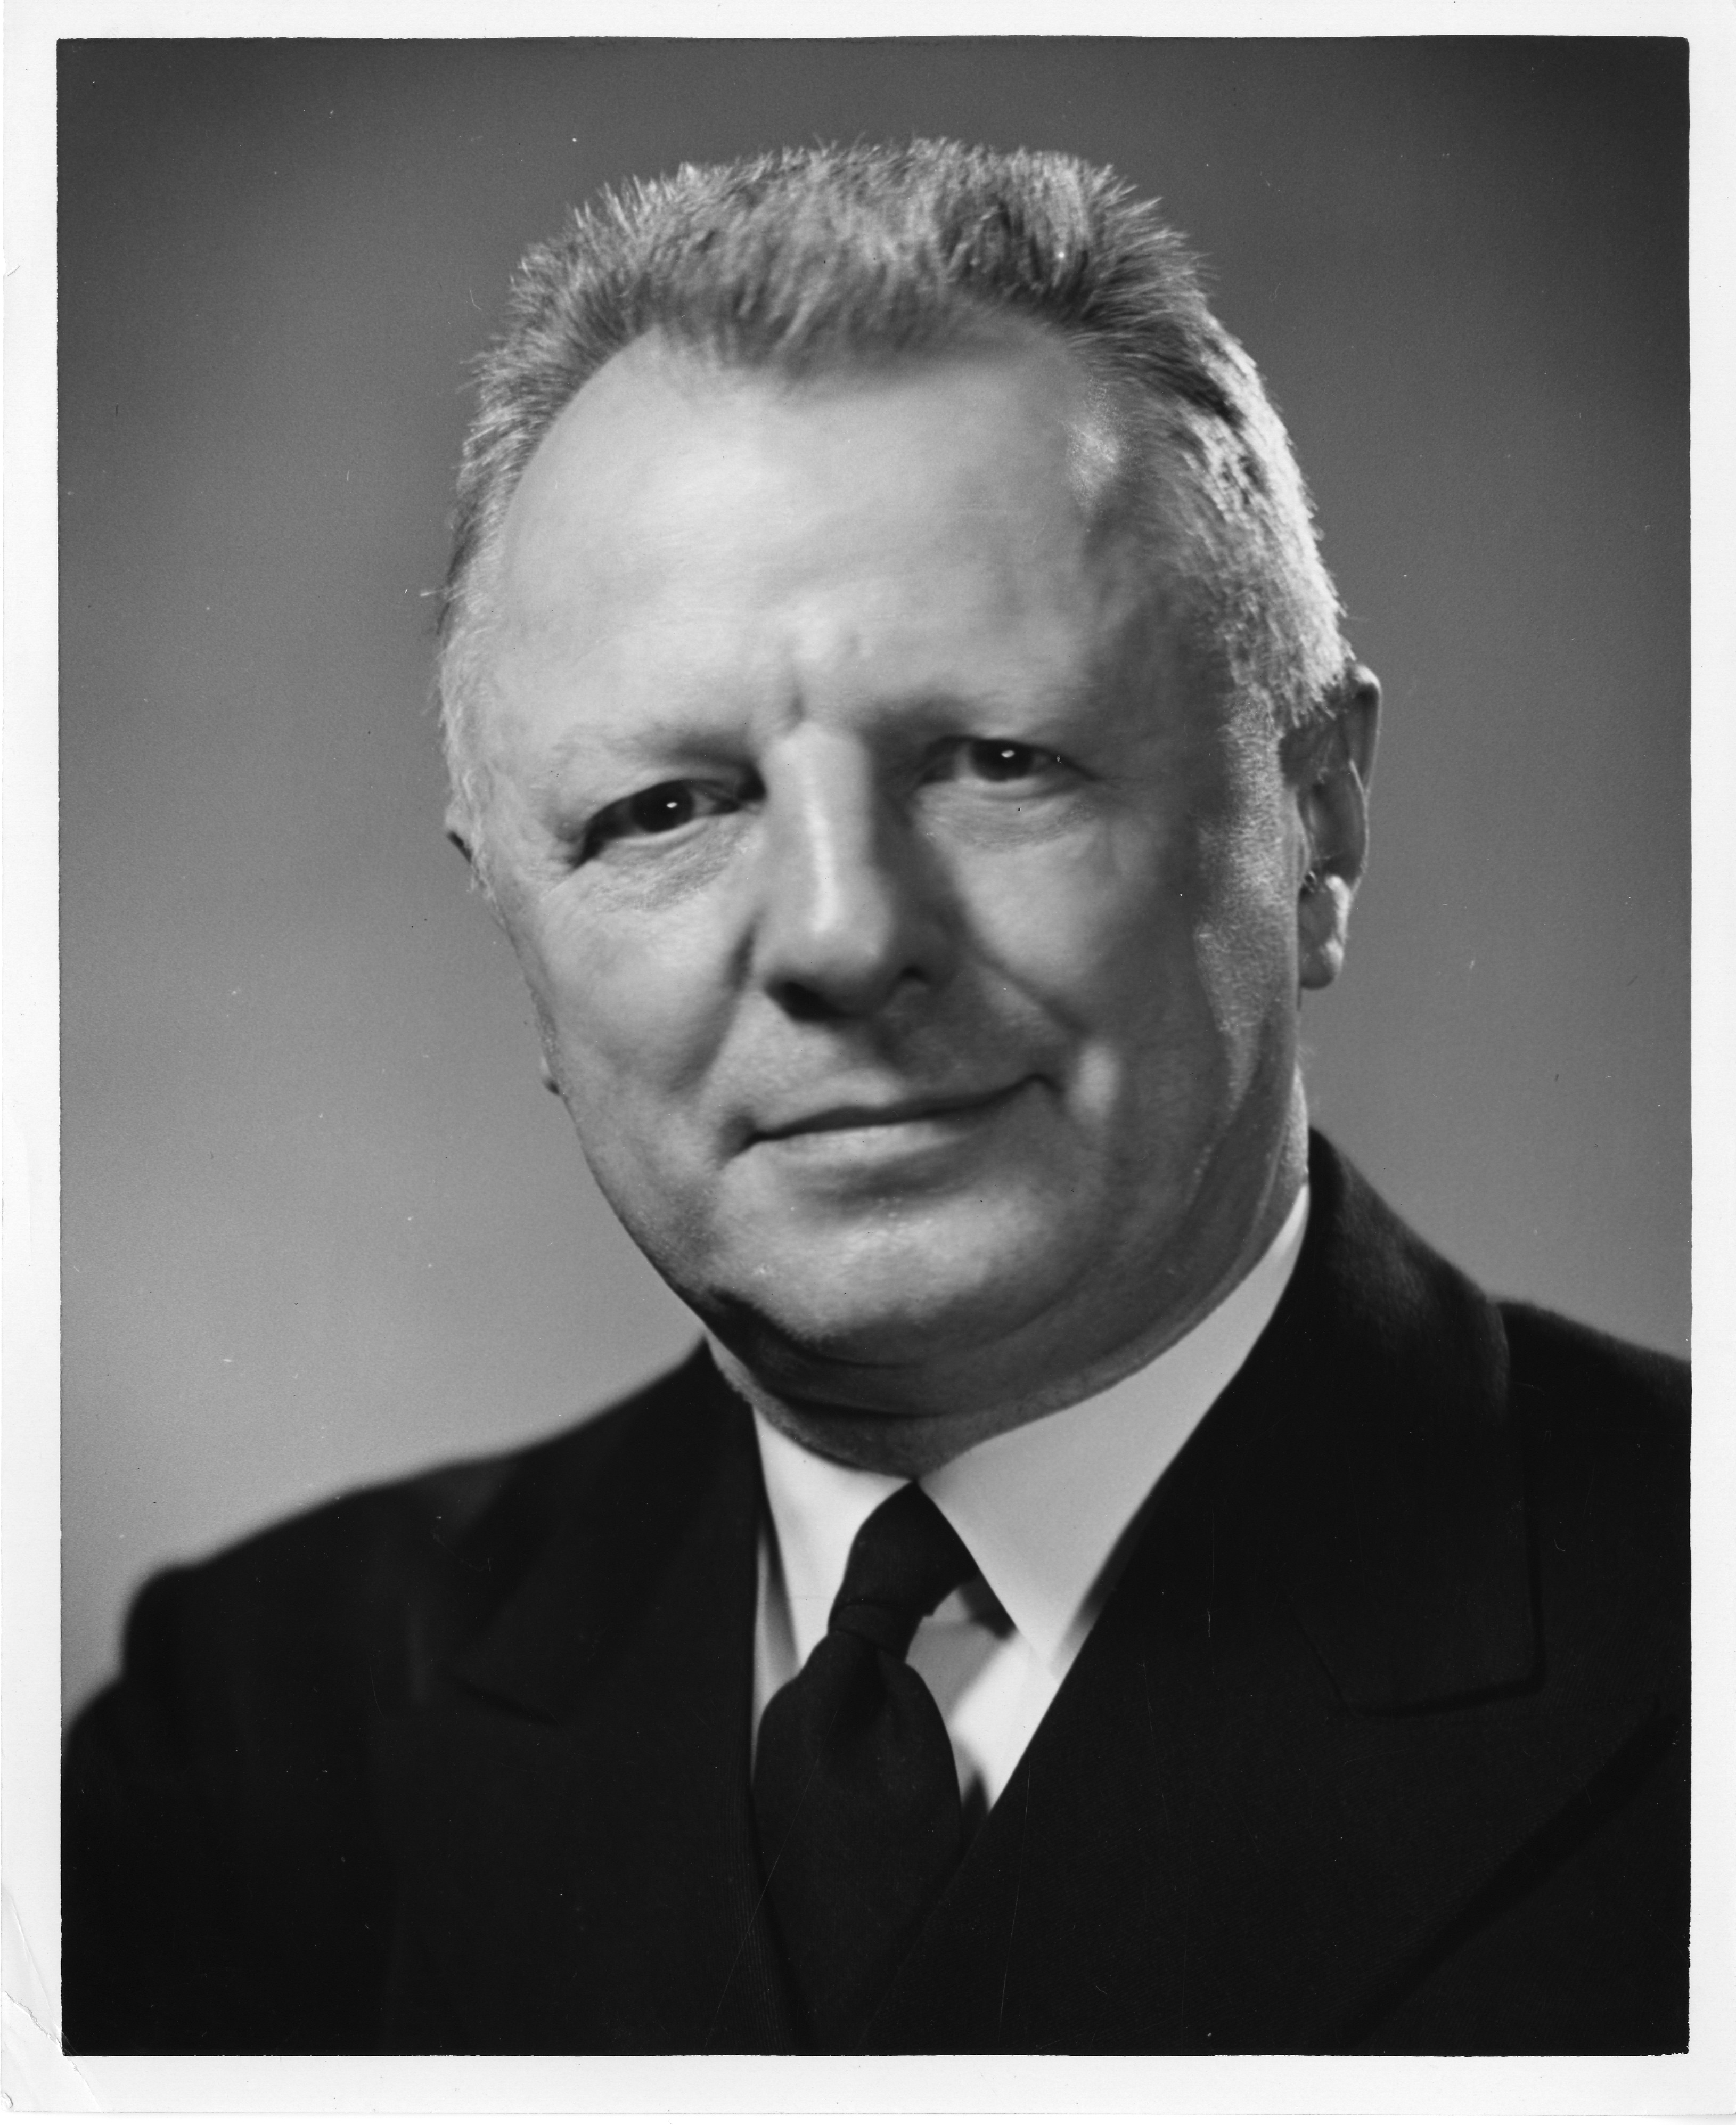 Portrait photograph of a person in a suit. 